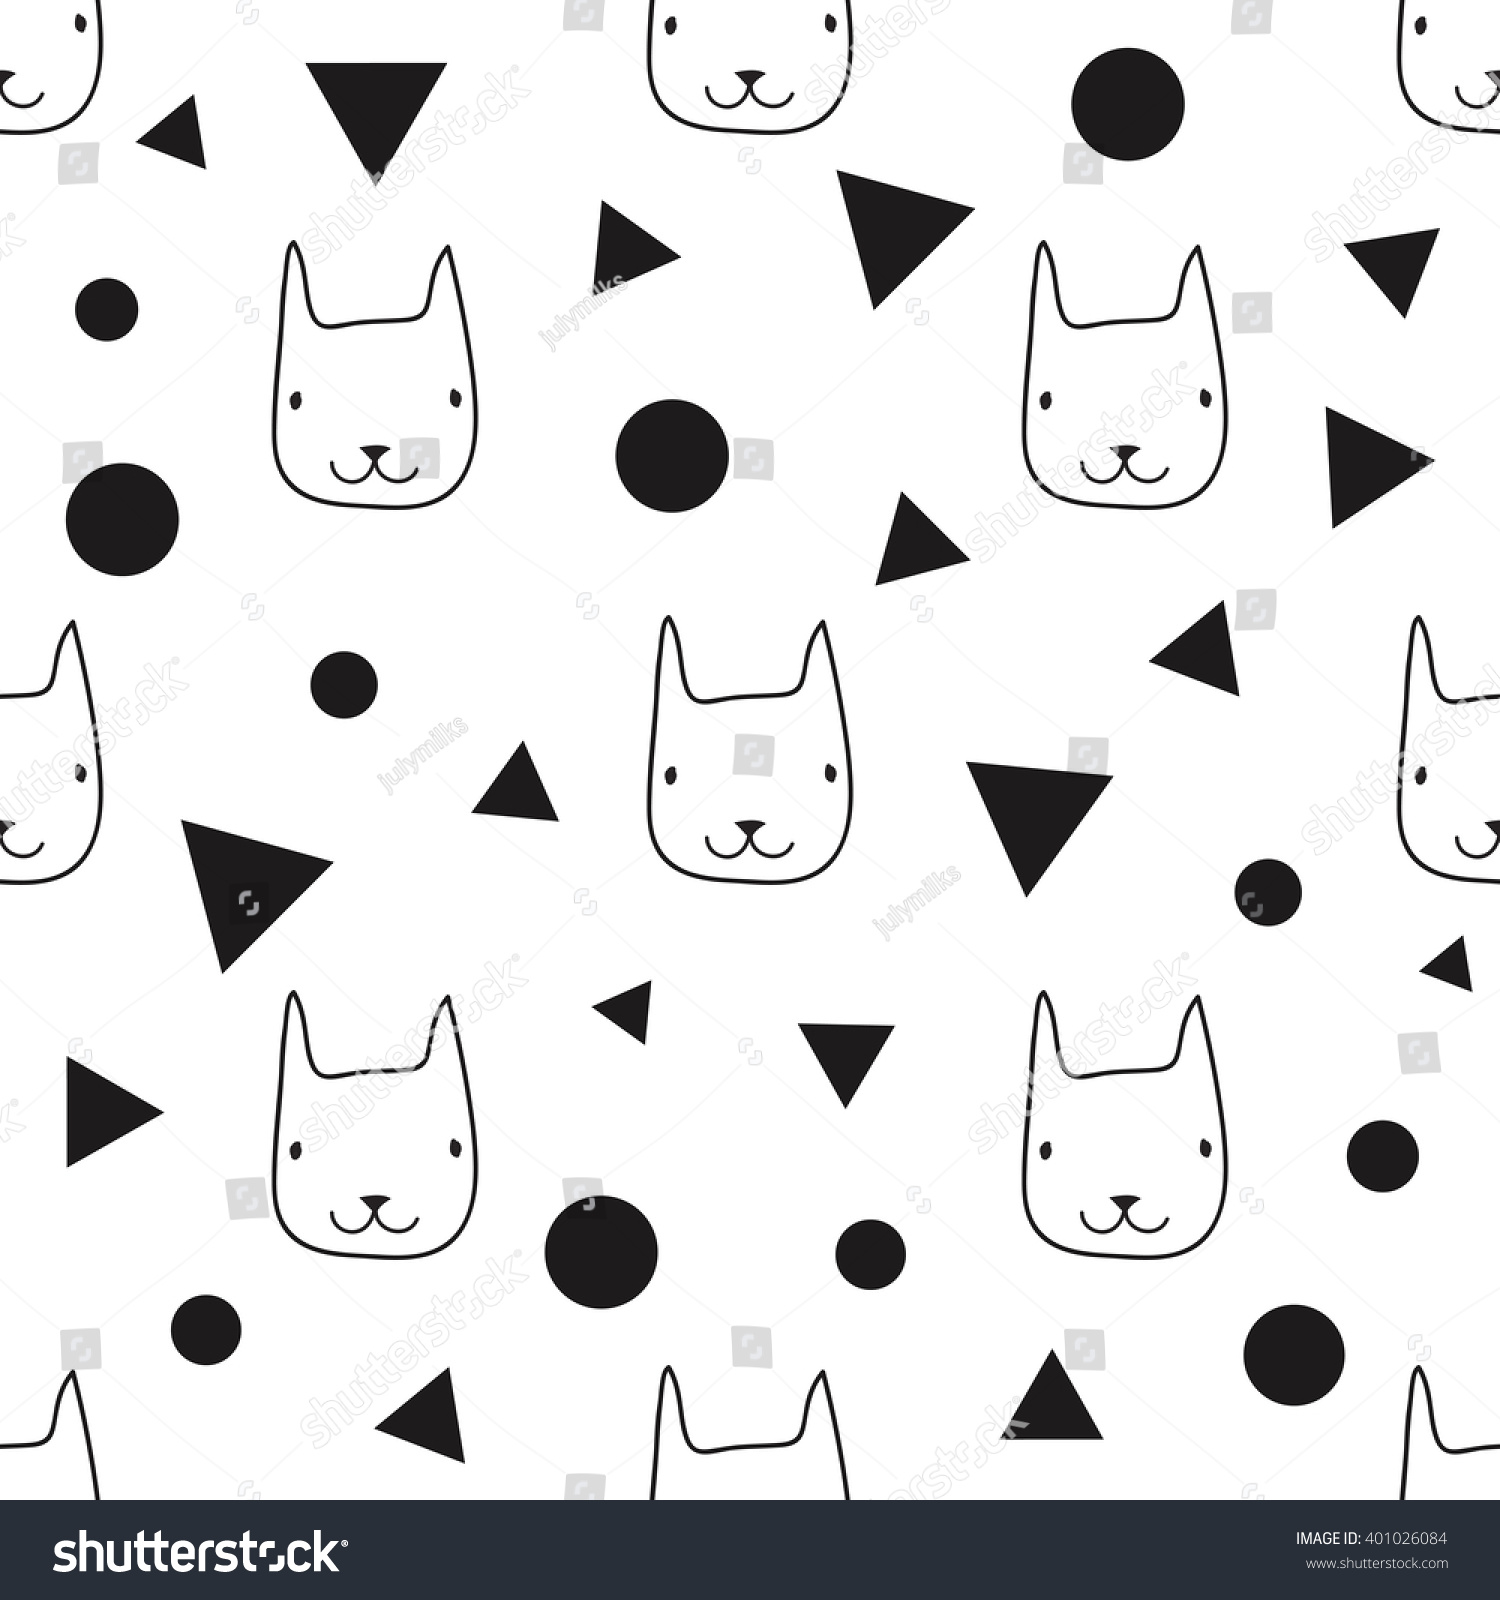 Funny Vector Seamless Pattern Animals Wallpaper Stock ...